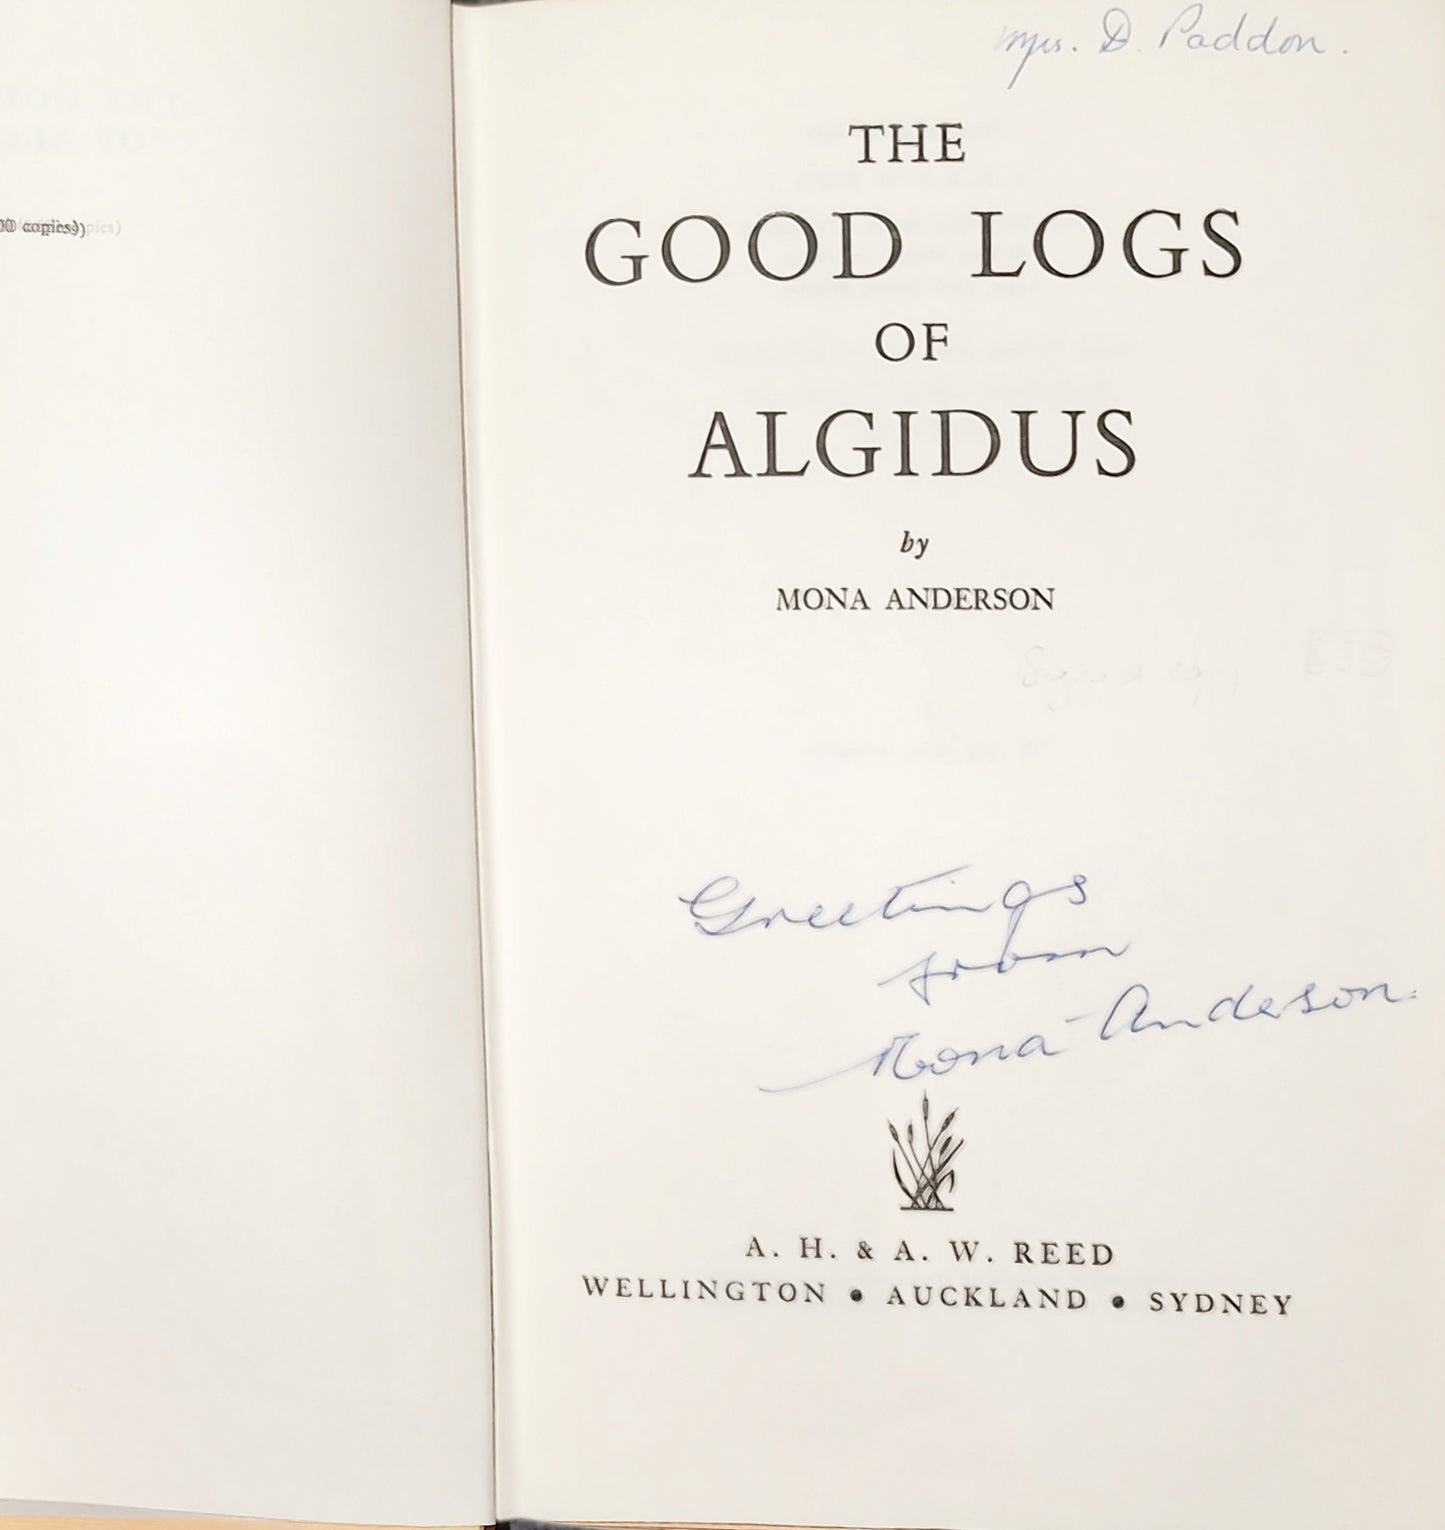 The Good Logs of Algidus